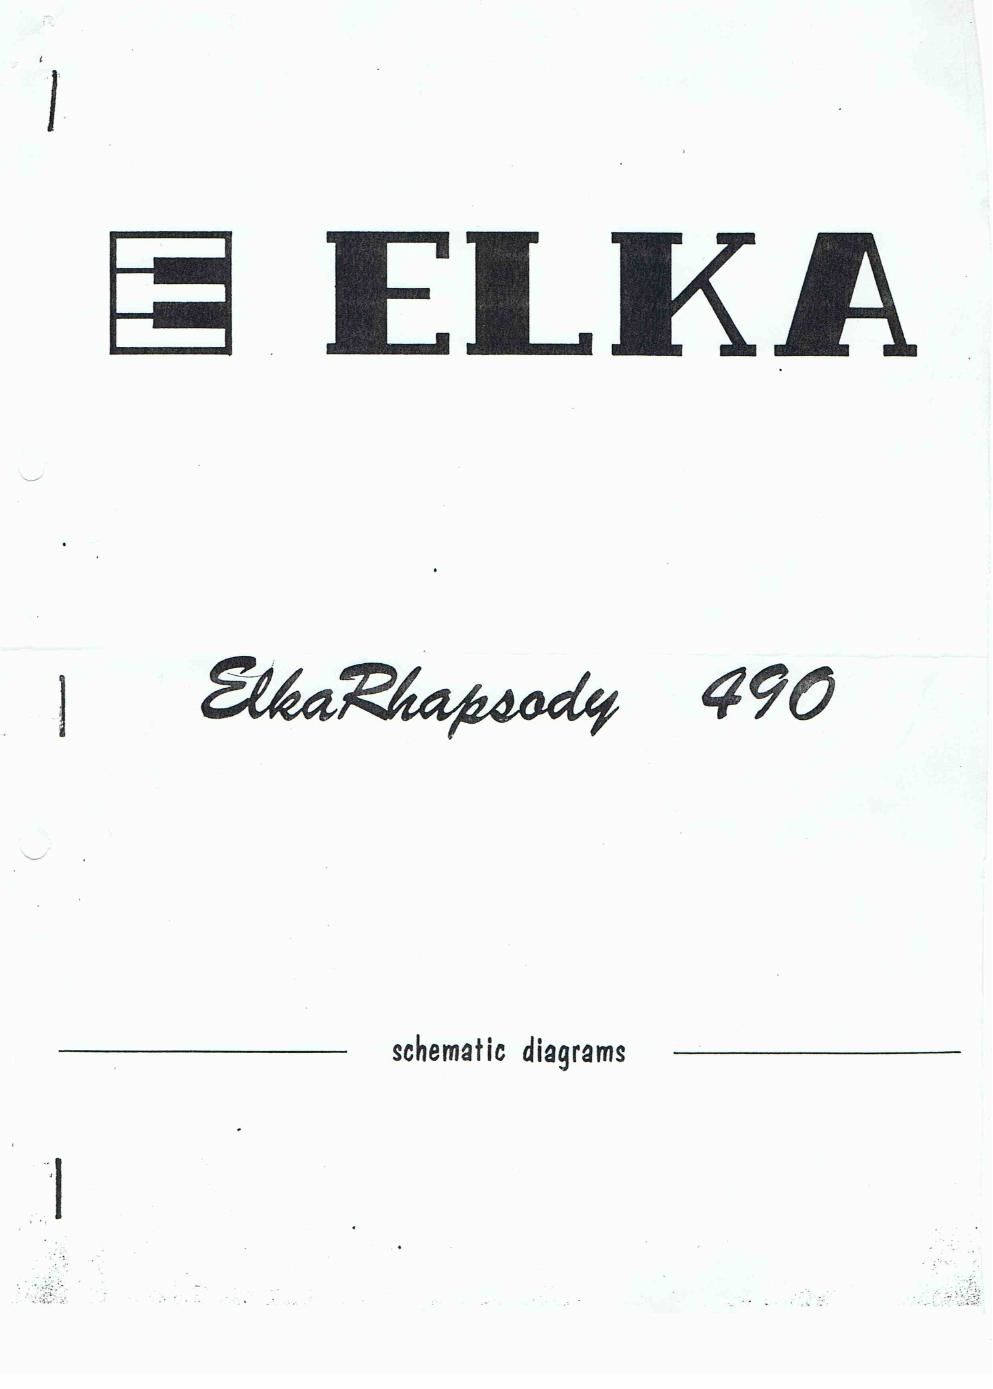 elka rhapsody 490 schematic